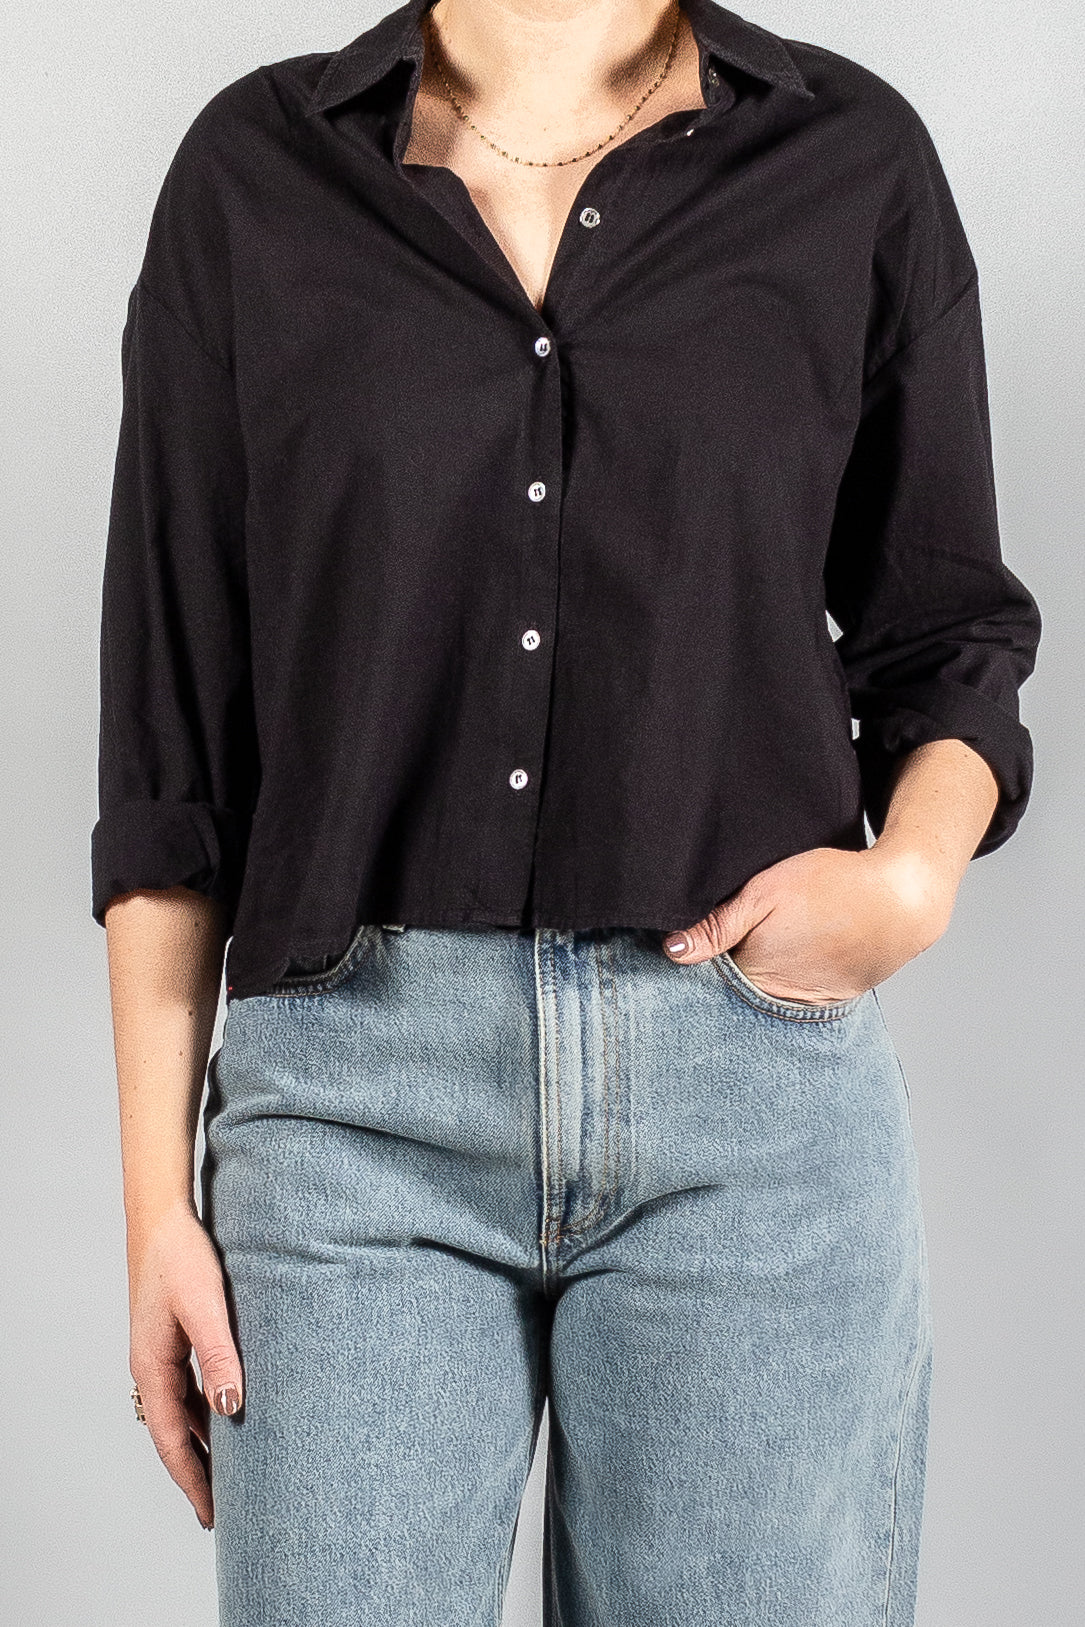 Xirena Dawson Shirt-Tops-Misch-Boutique-Vancouver-Canada-misch.ca